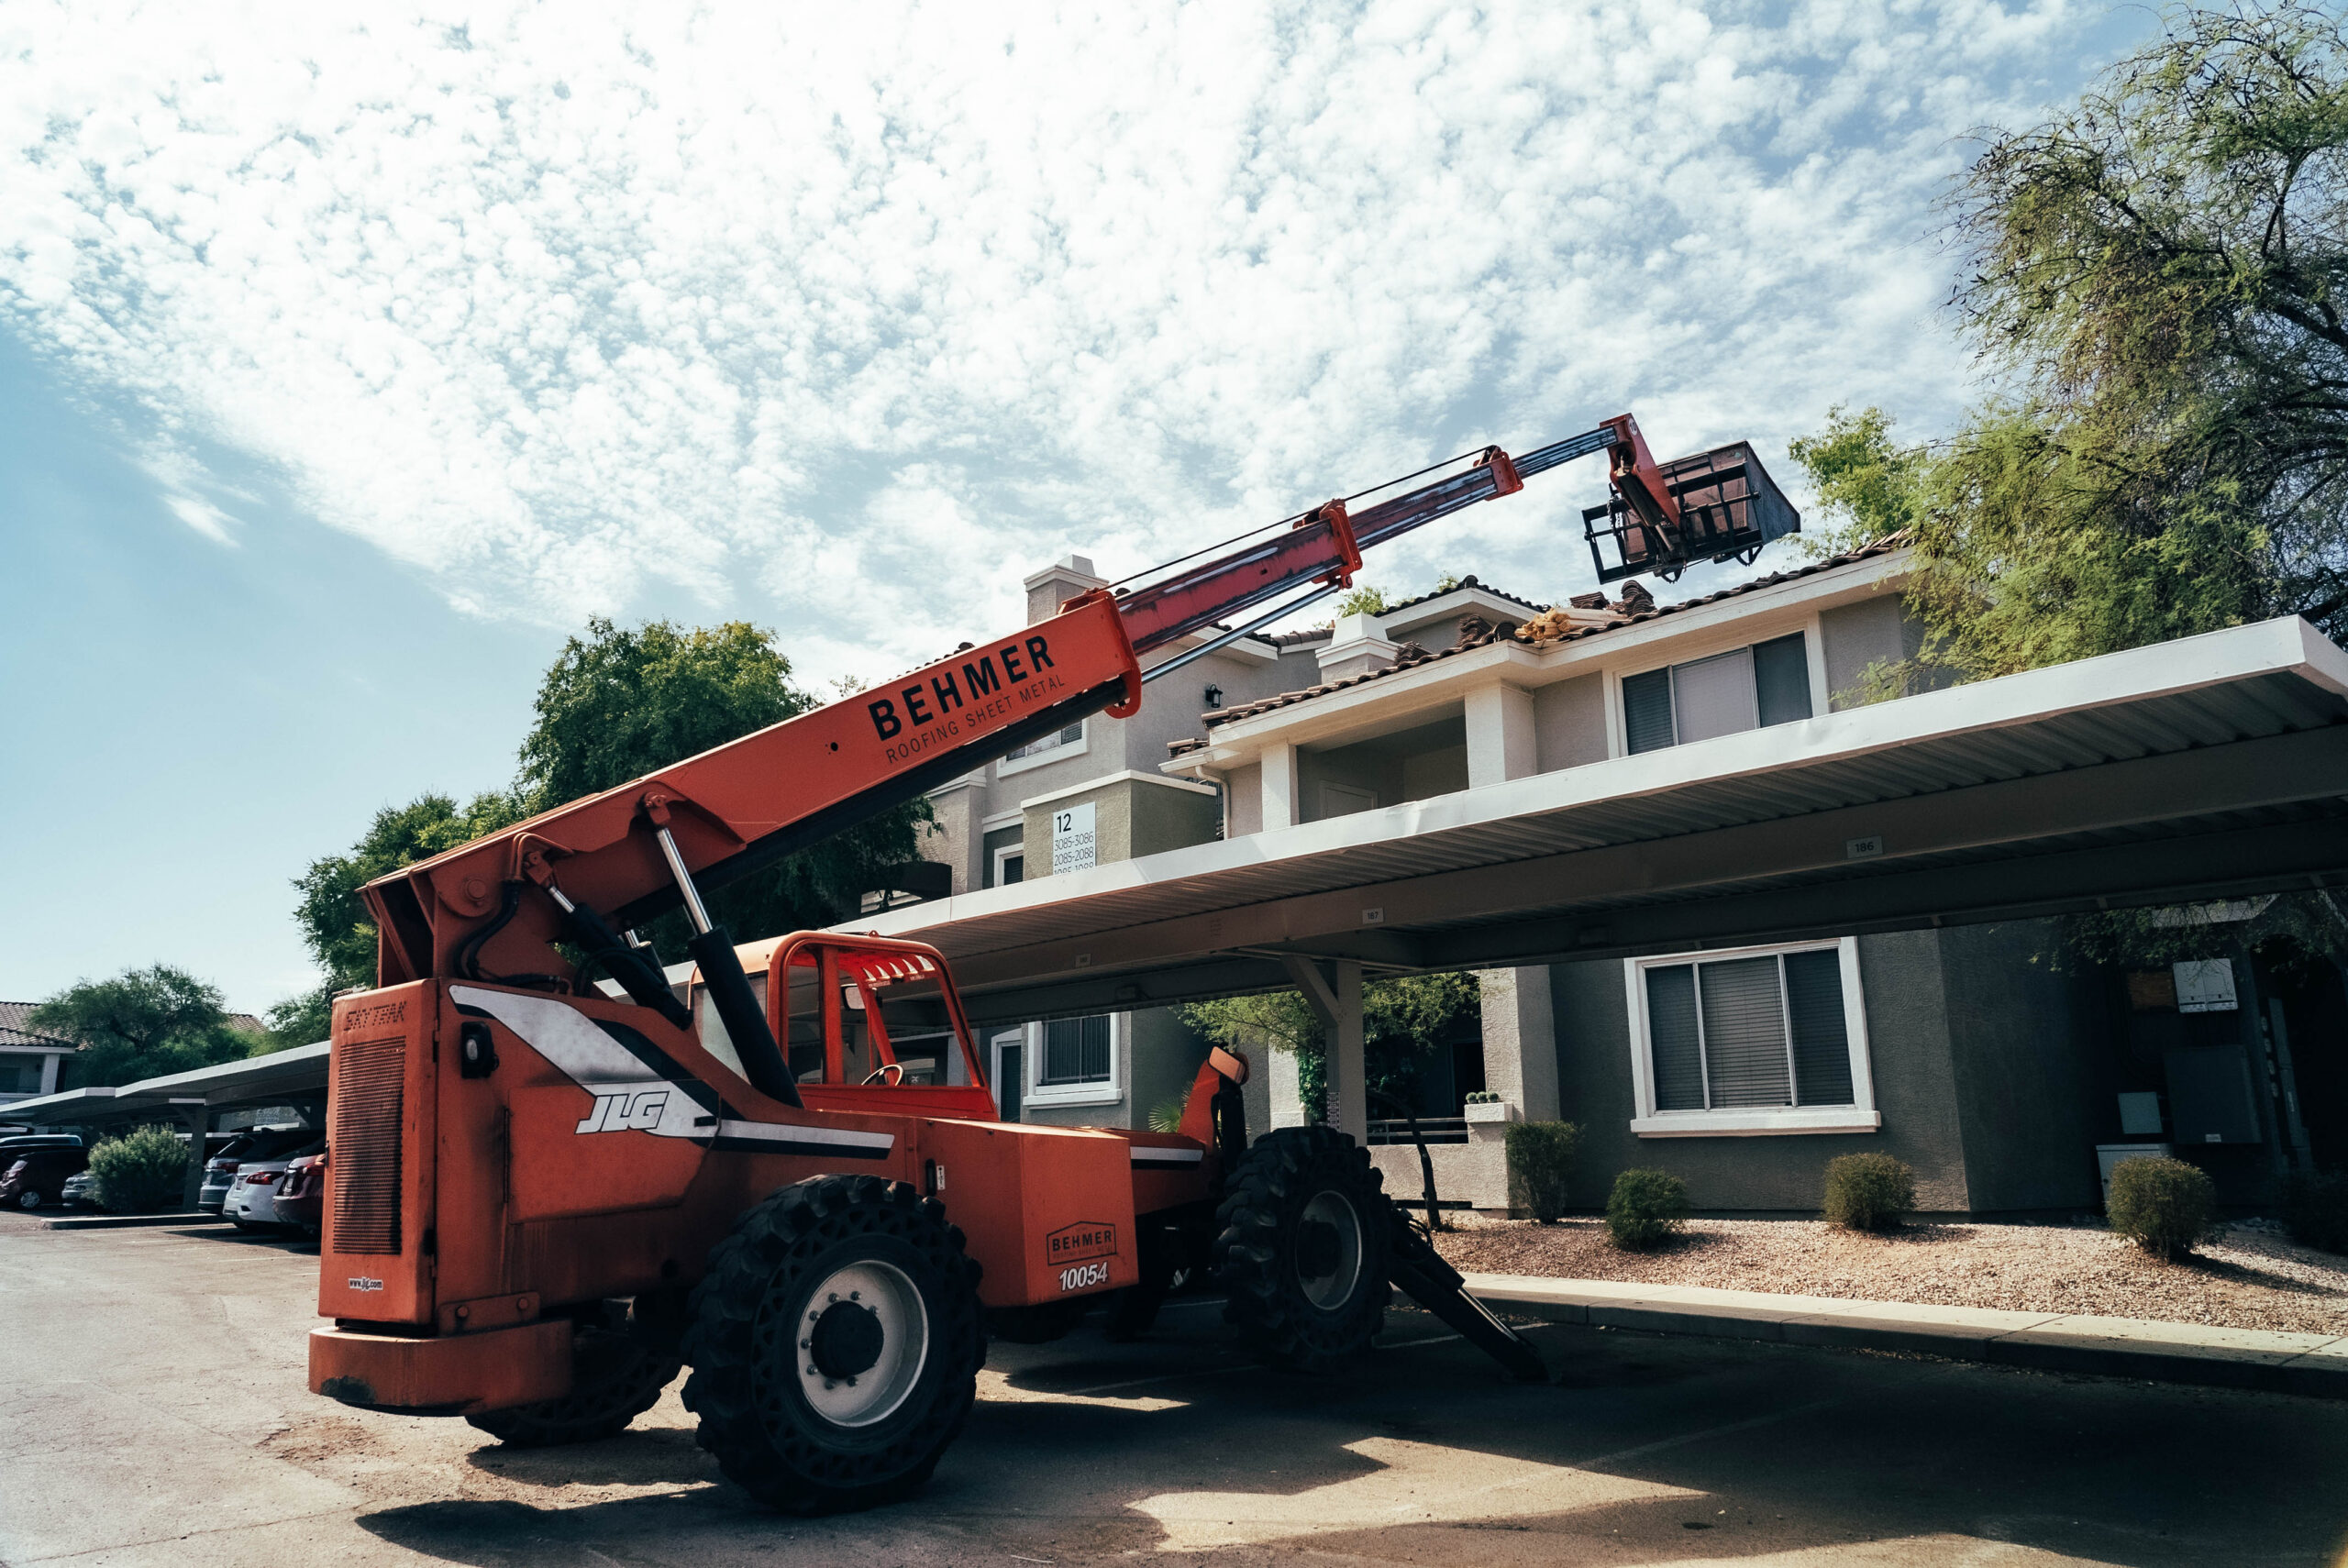 Orange crane positioned at a Biltmore area job site for tile roofing.